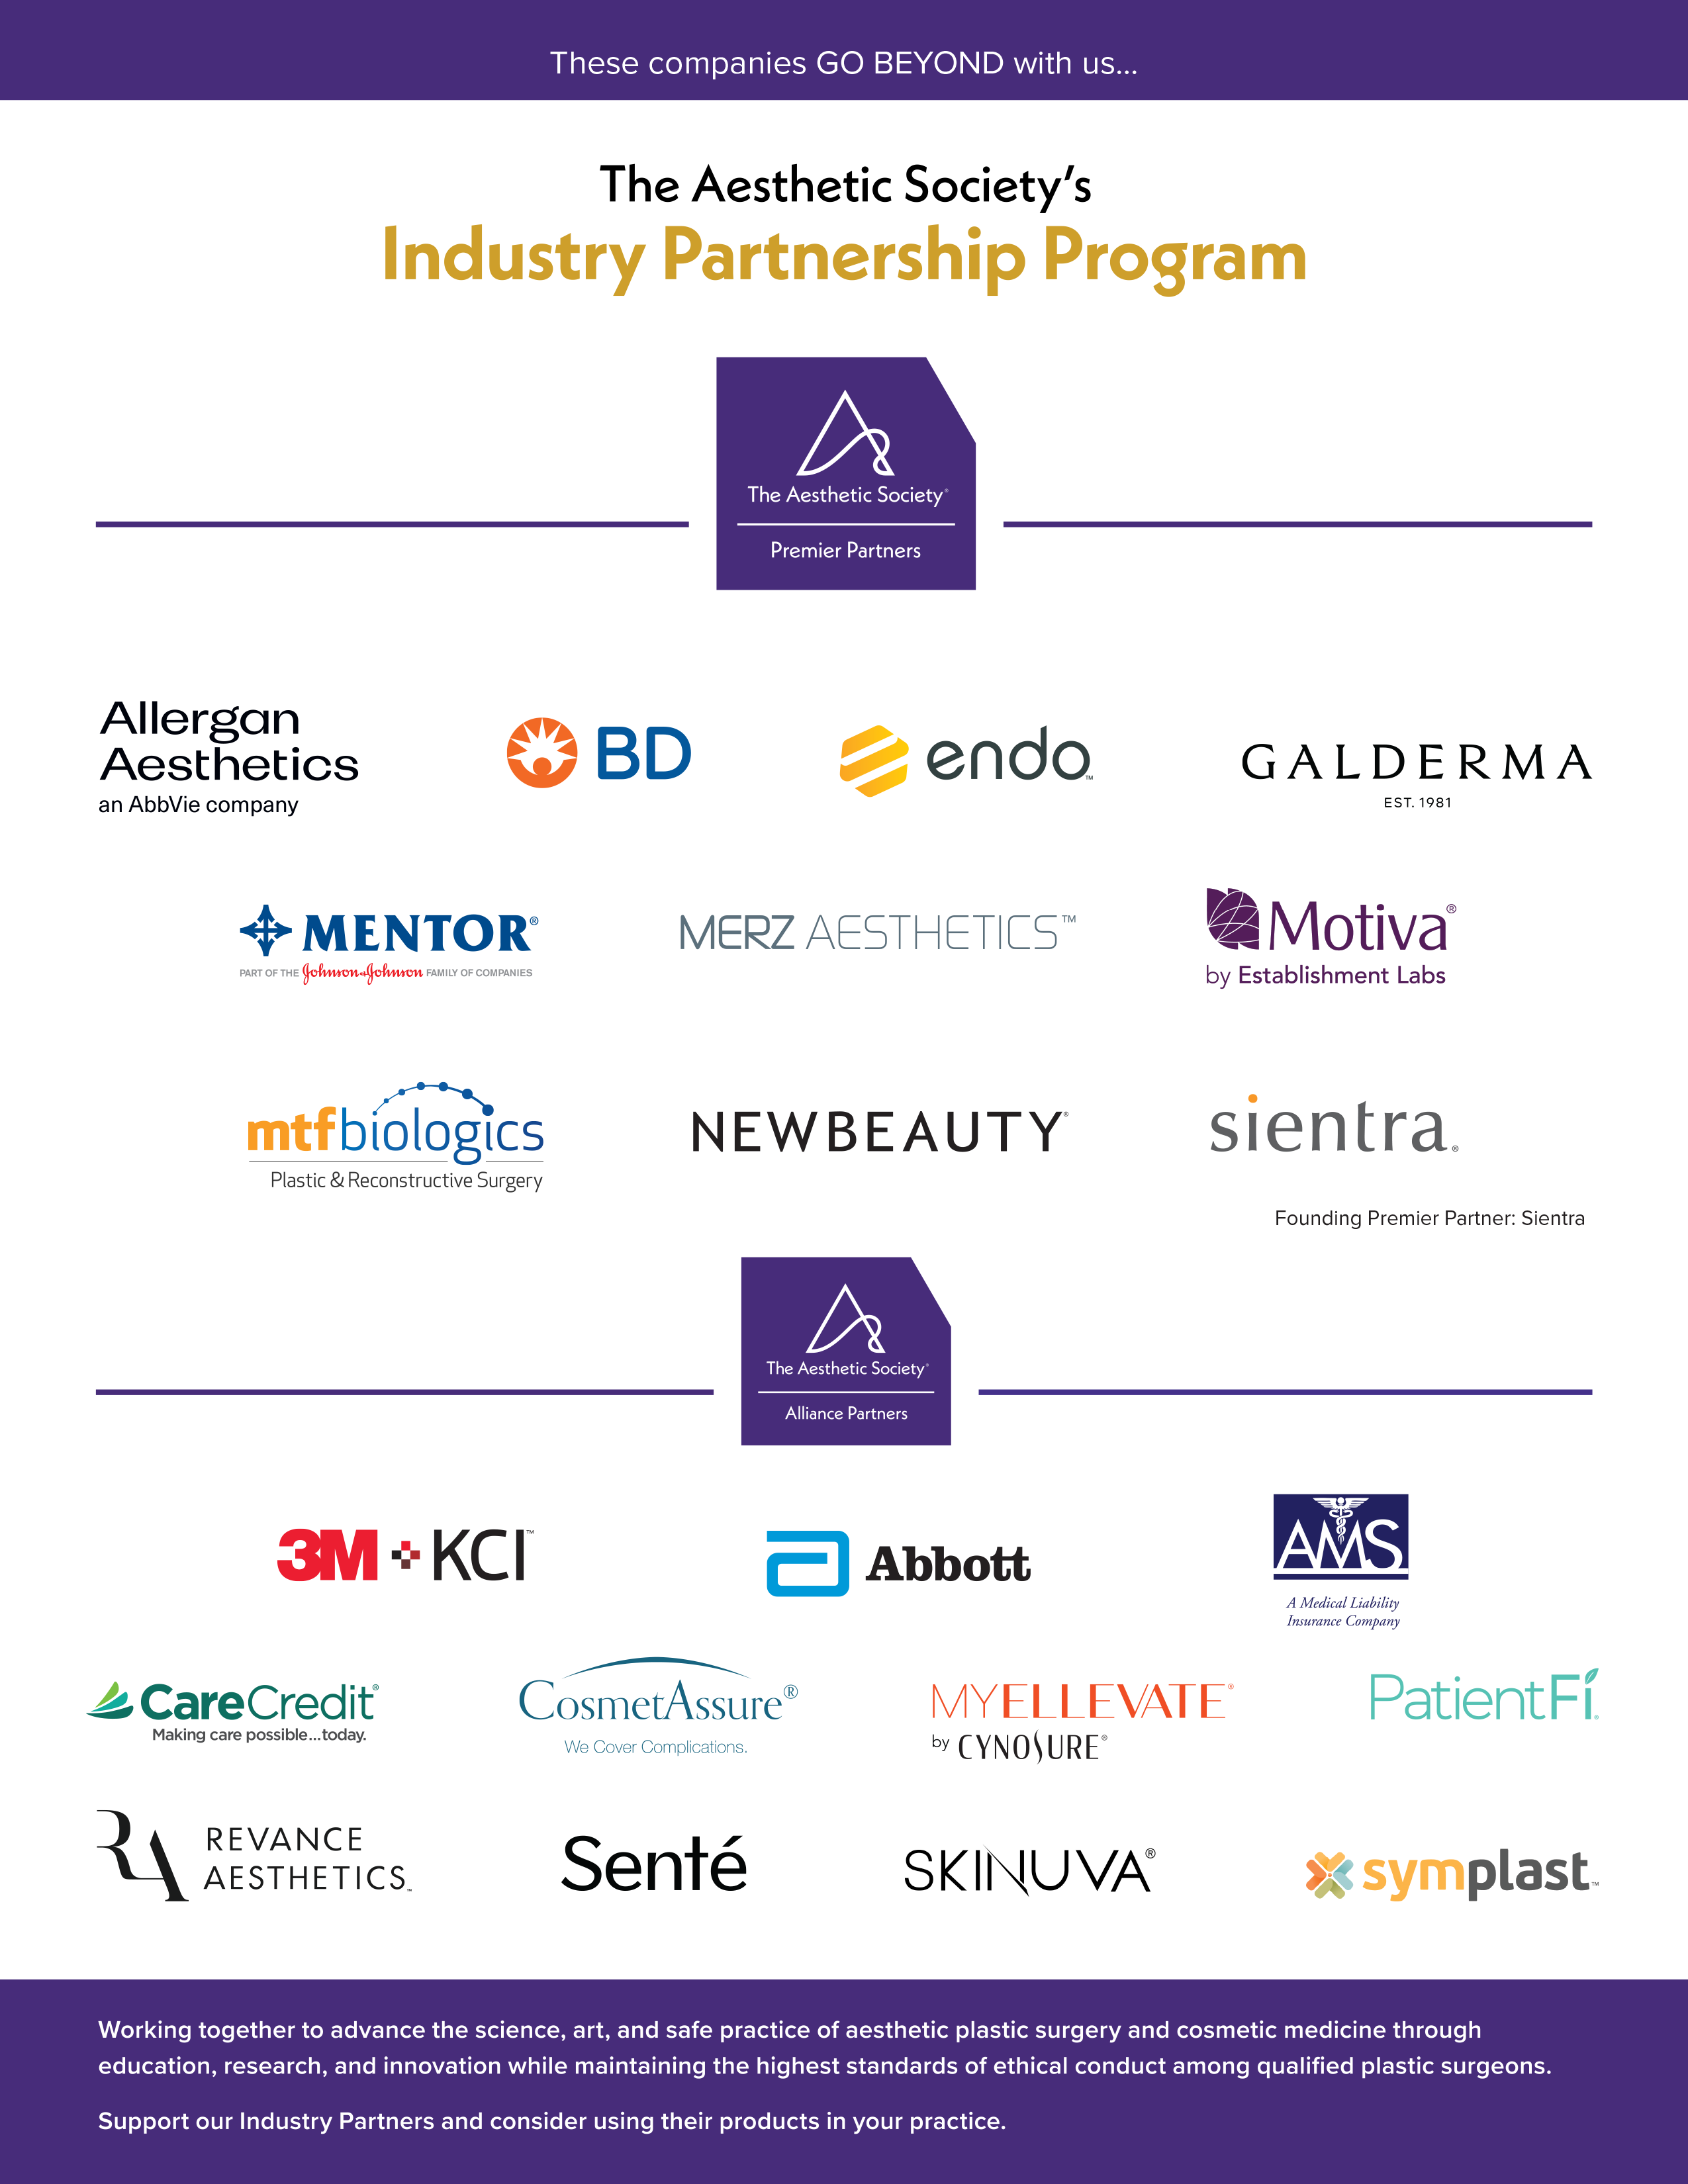 The Aesthetic Society Industry Partnership Program